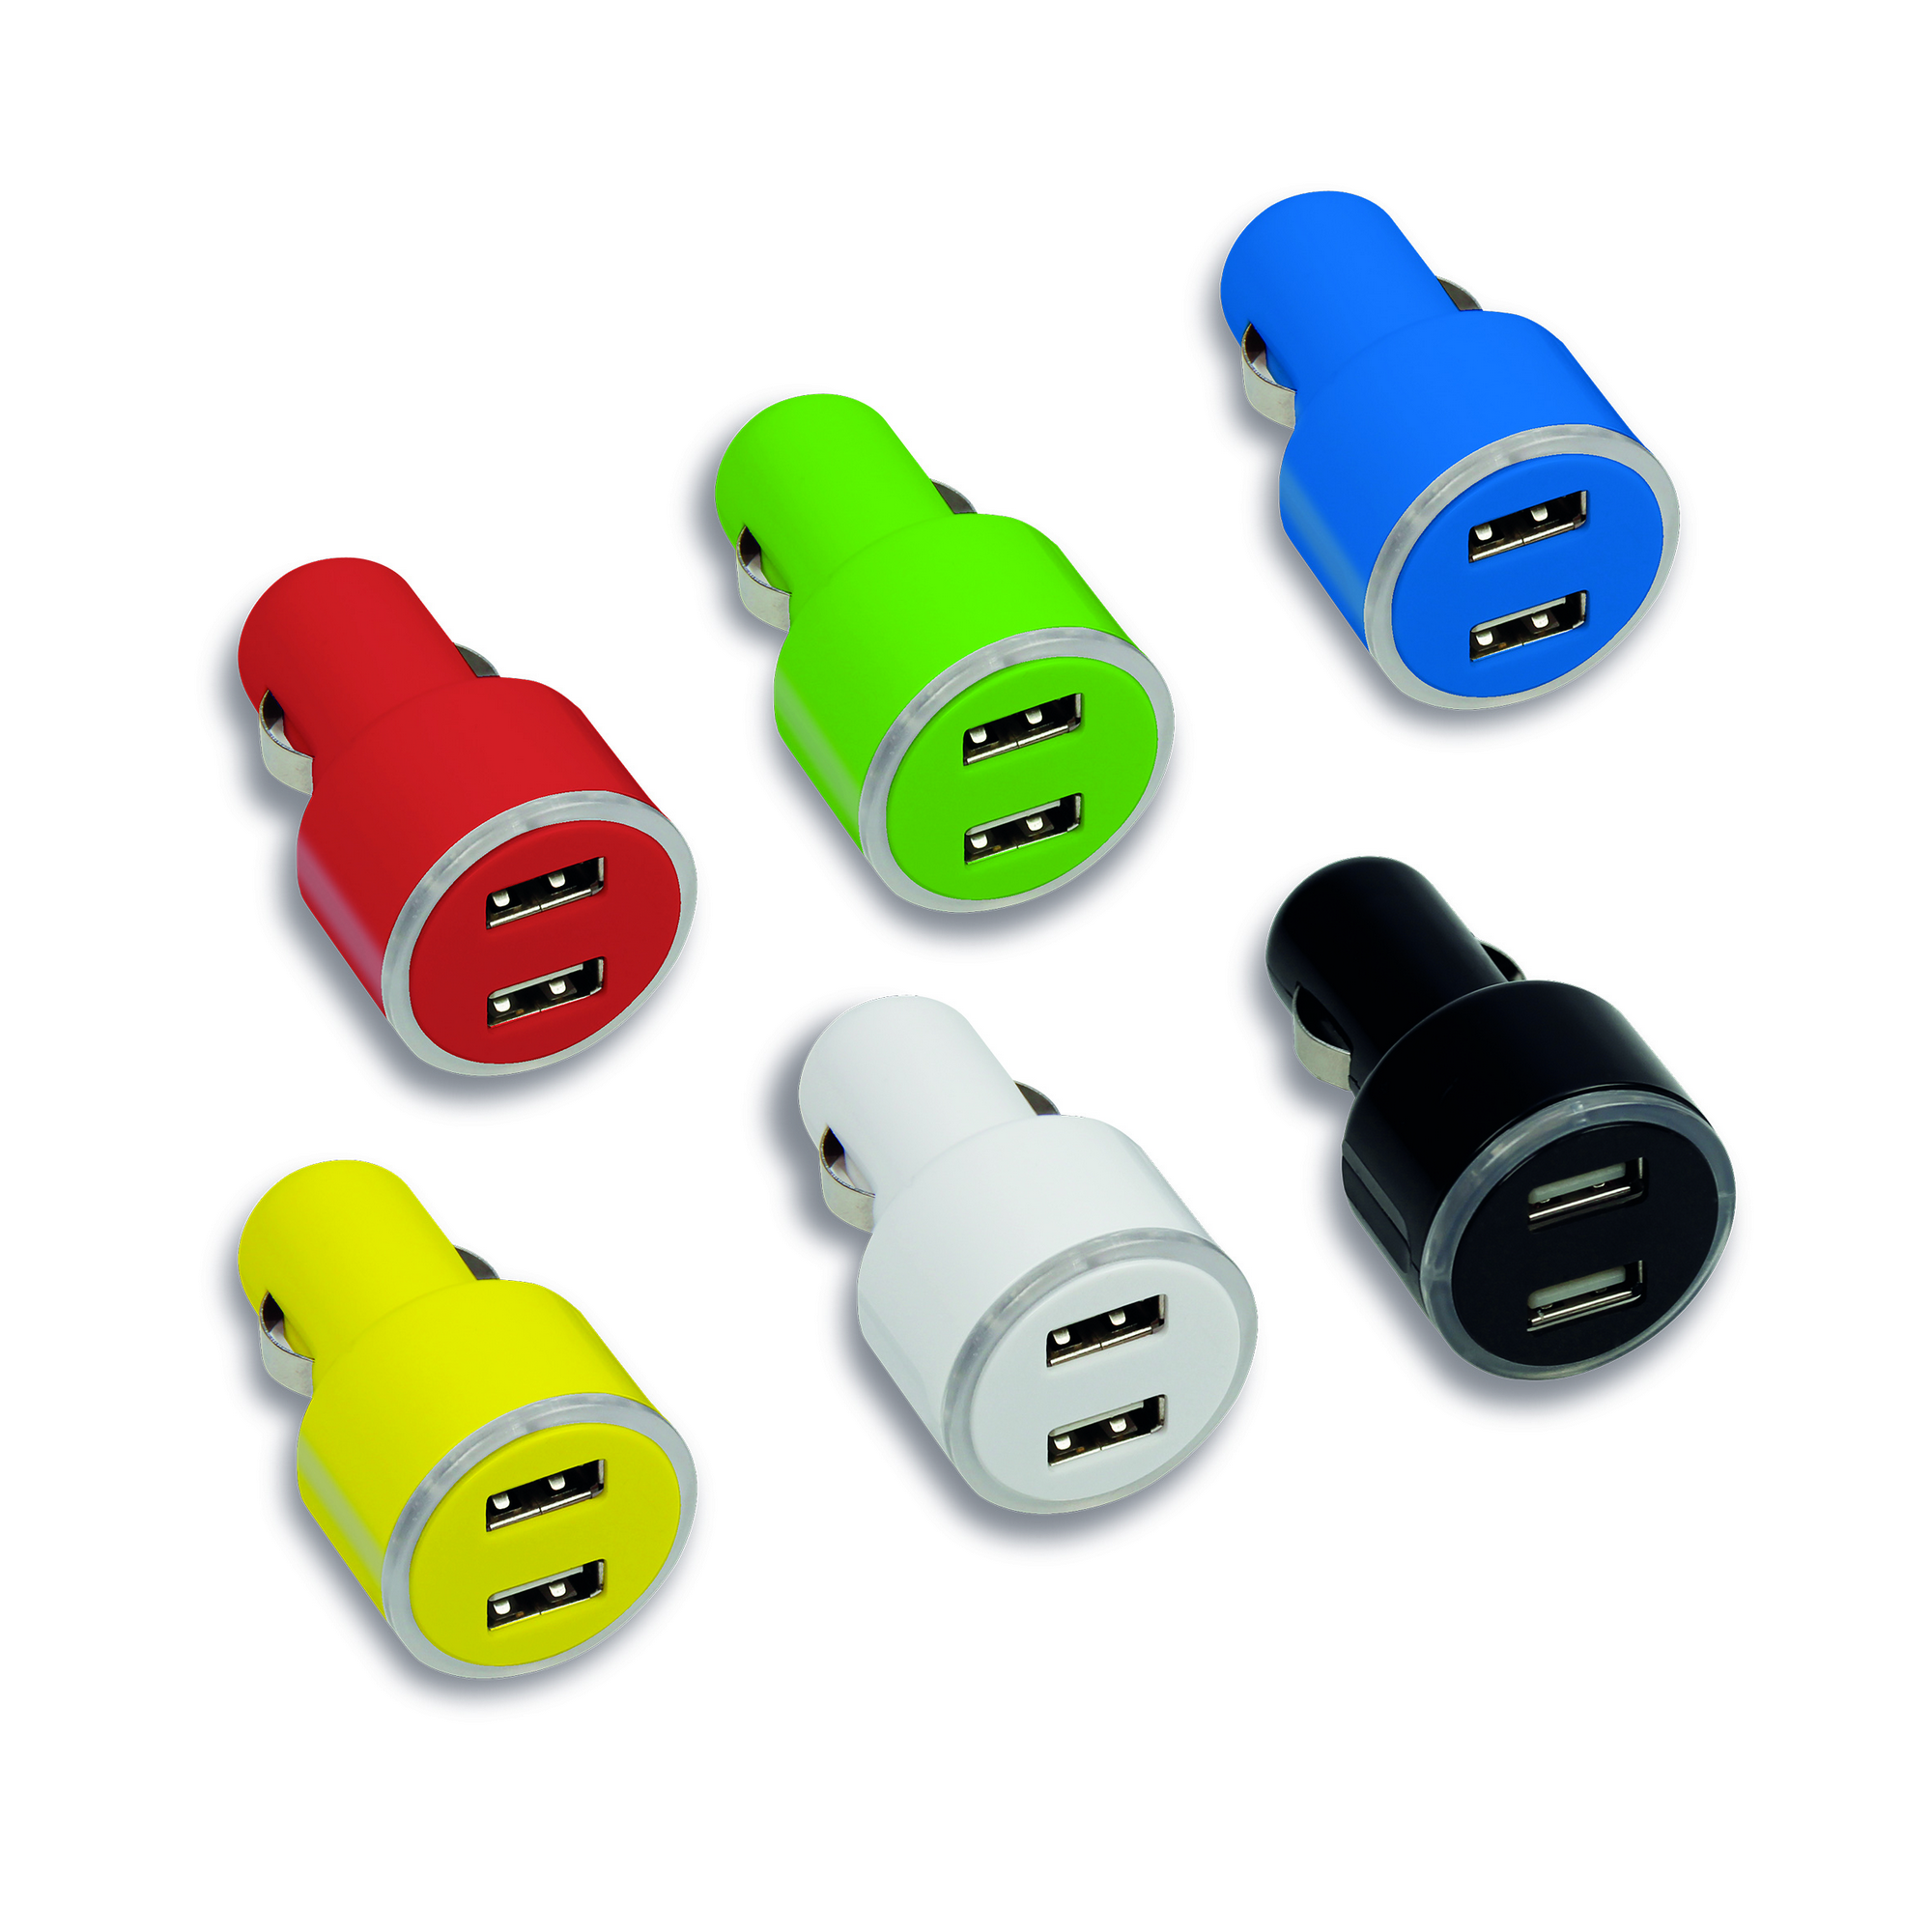 USB-Kfz-Ladegerät 2-fach + product picture